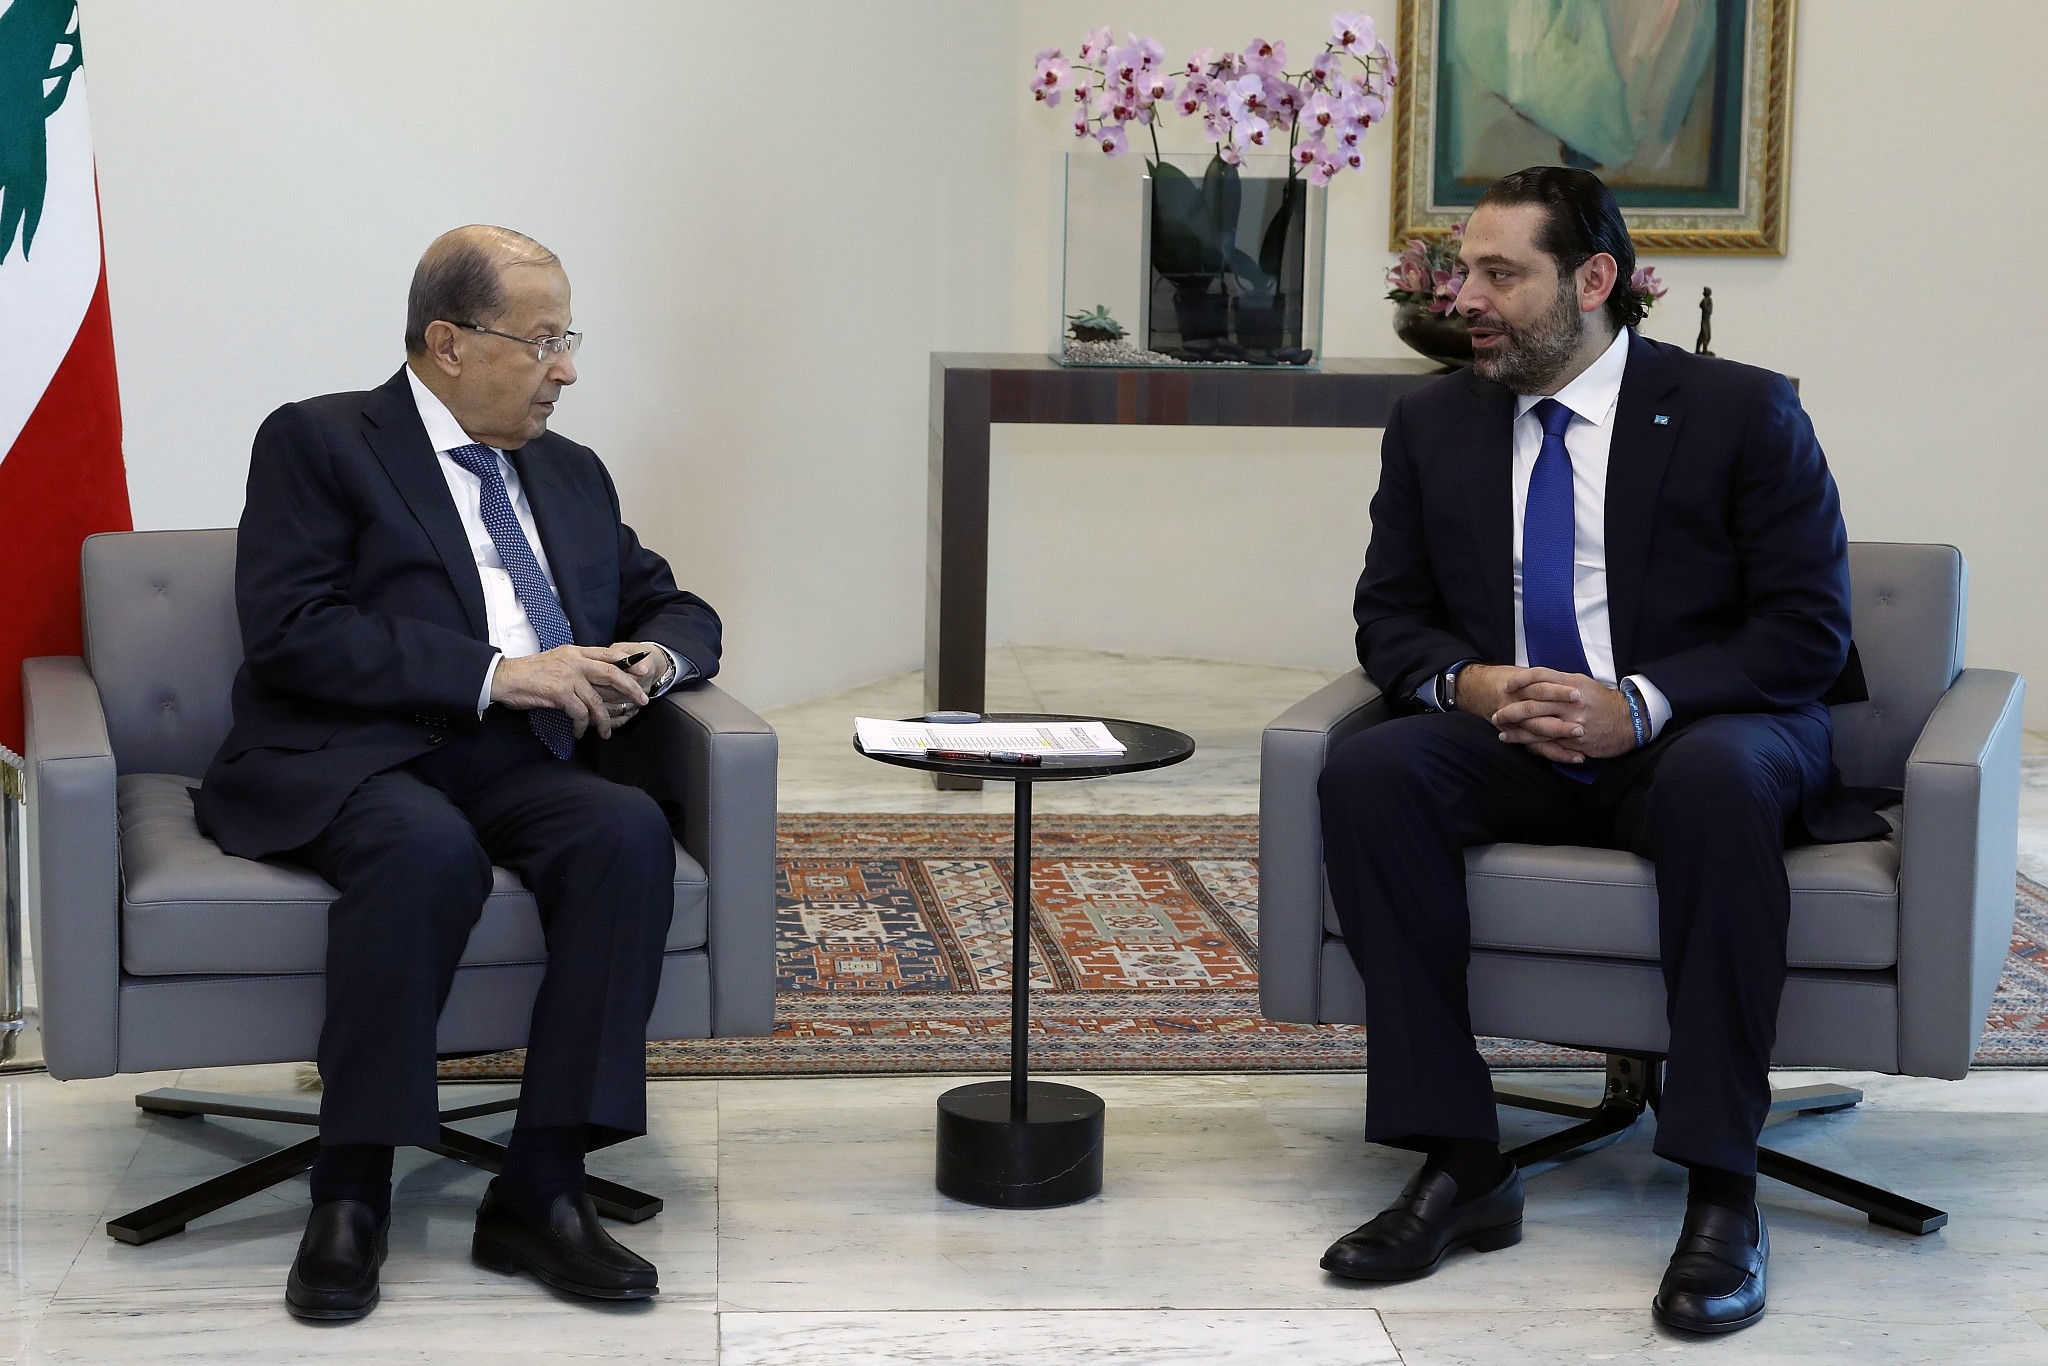 Lebanon S Premier Saad Hariri Chosen To Form New Cabinet The